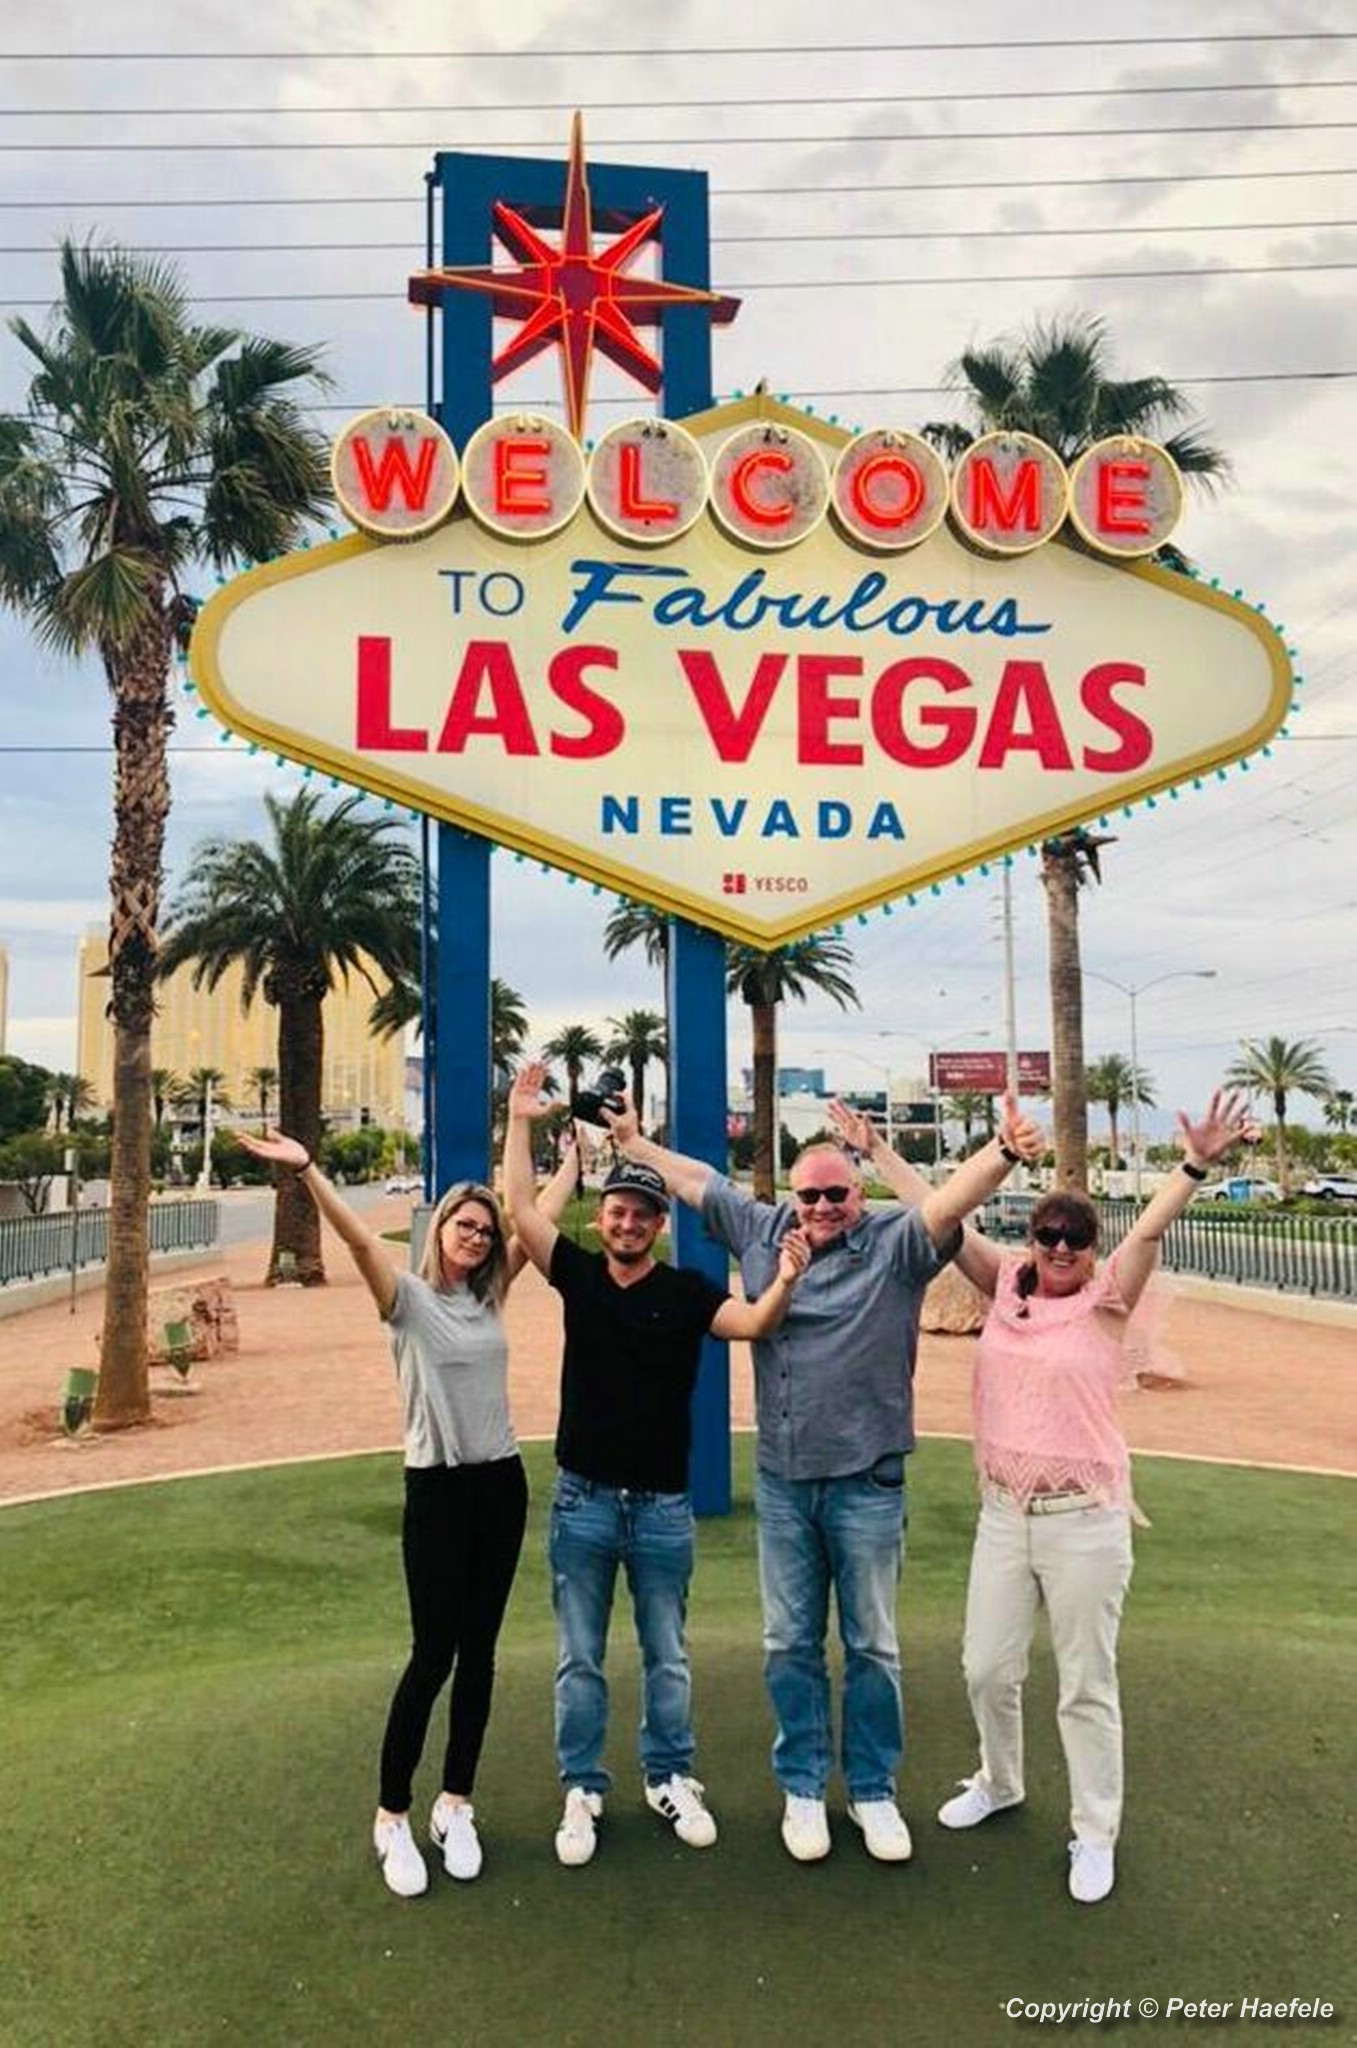 Roadtrip USA - Las Vegas - Welcome to Fabulous Las Vegas - Las Vegas Sign